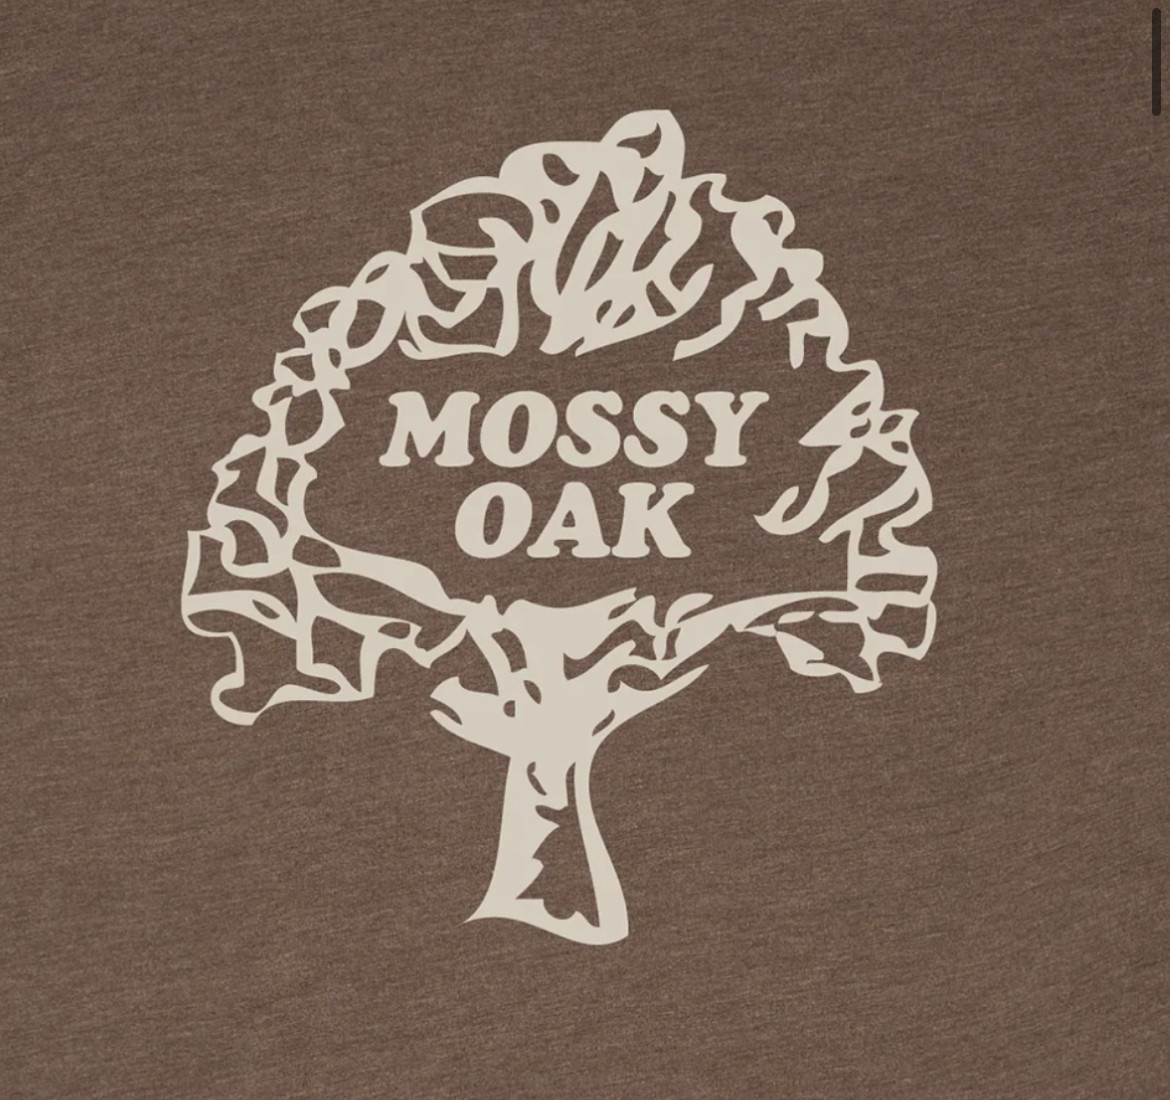 Use “OTL20” for 20% off Mossy Oak  thumbnail